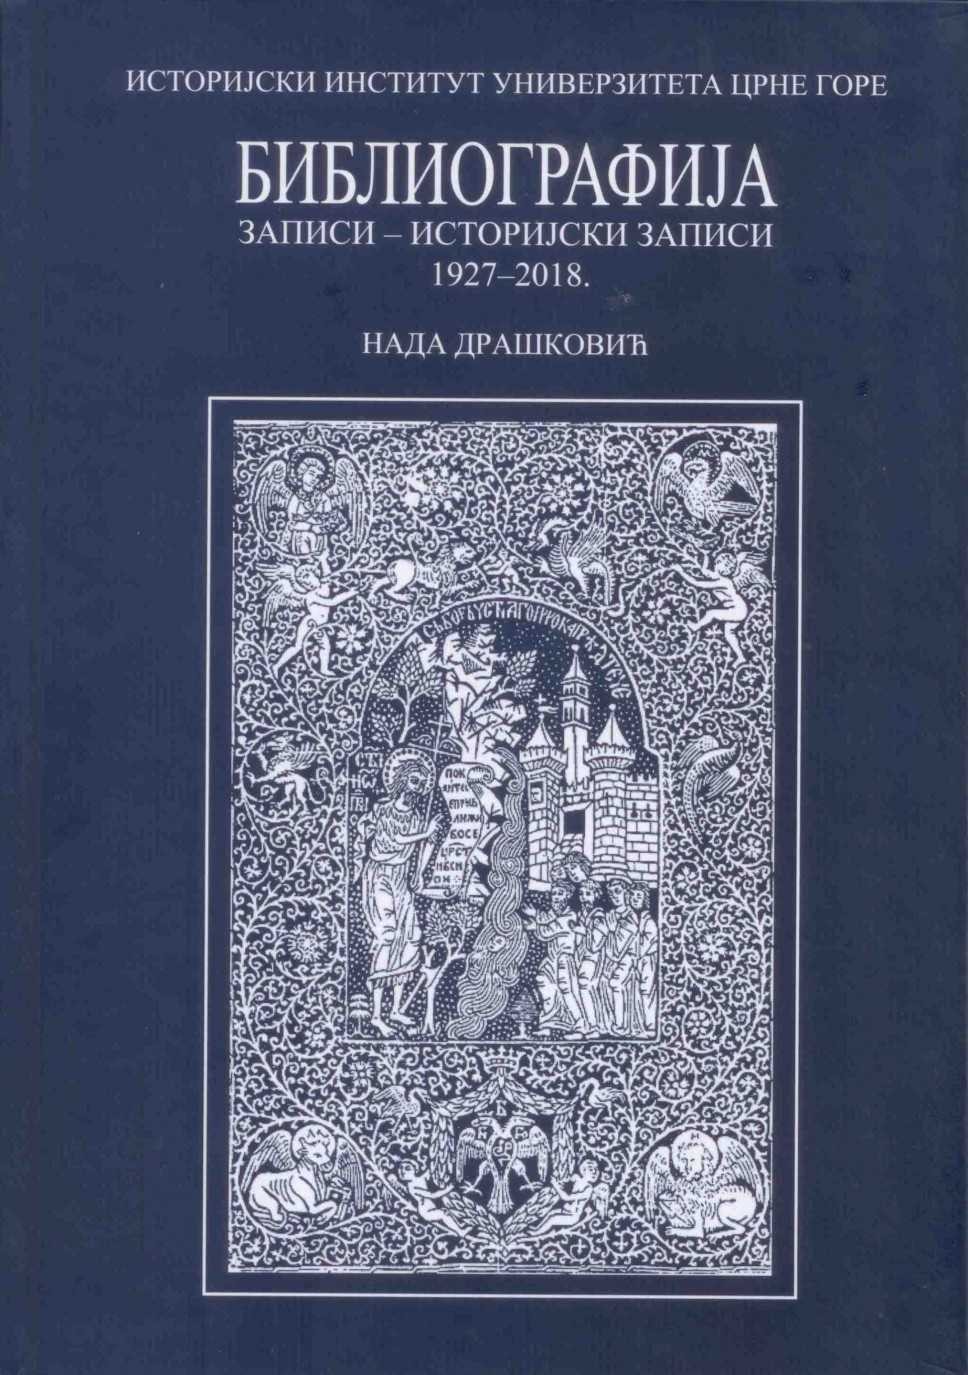 Bibliography of Istorijski zapisi available in pdf